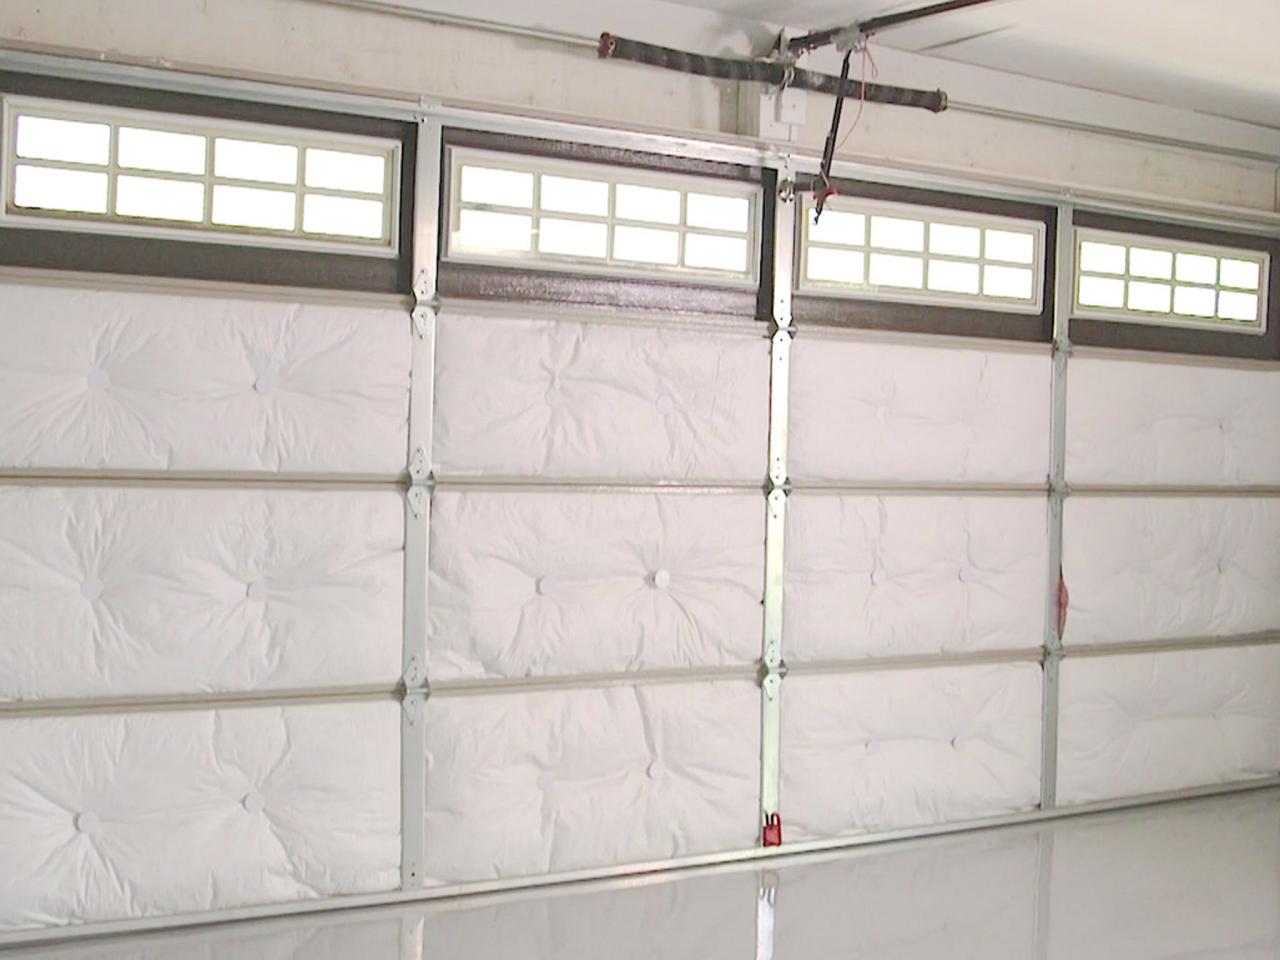 How To Insulate A Garage Door, How Much Does An Insulated Garage Door Help